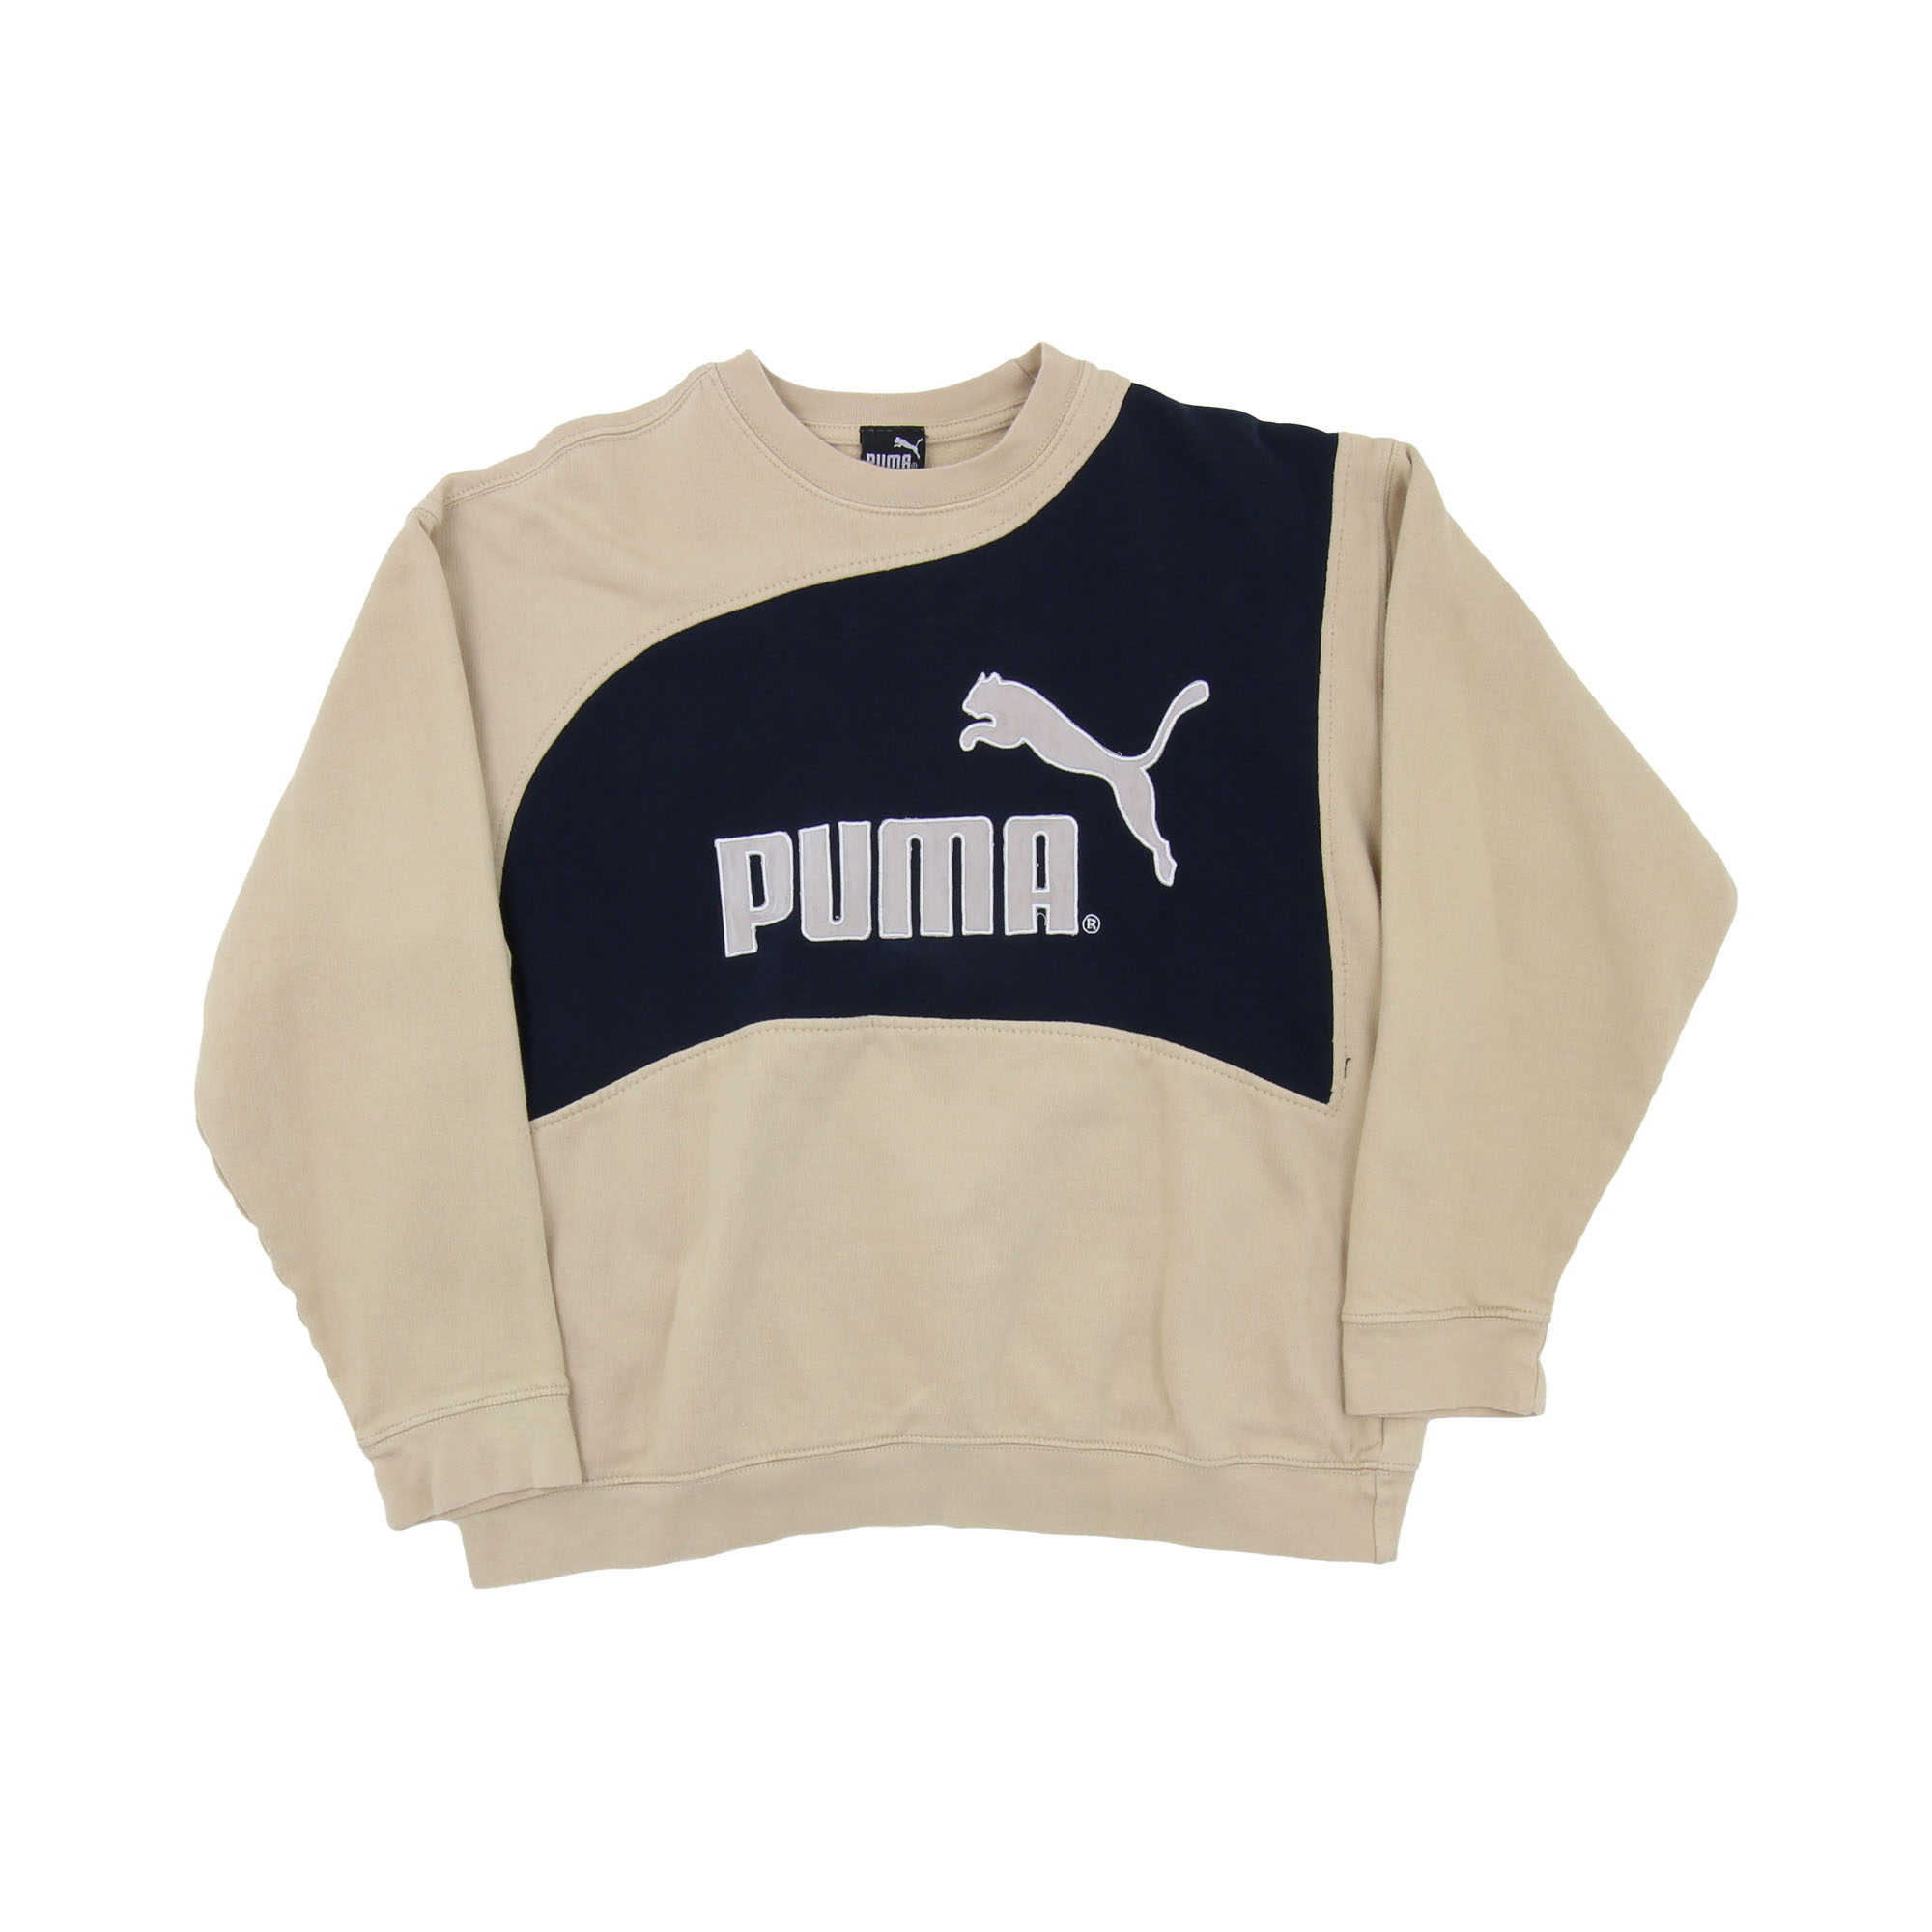 Puma Rework Sweatshirt -  S